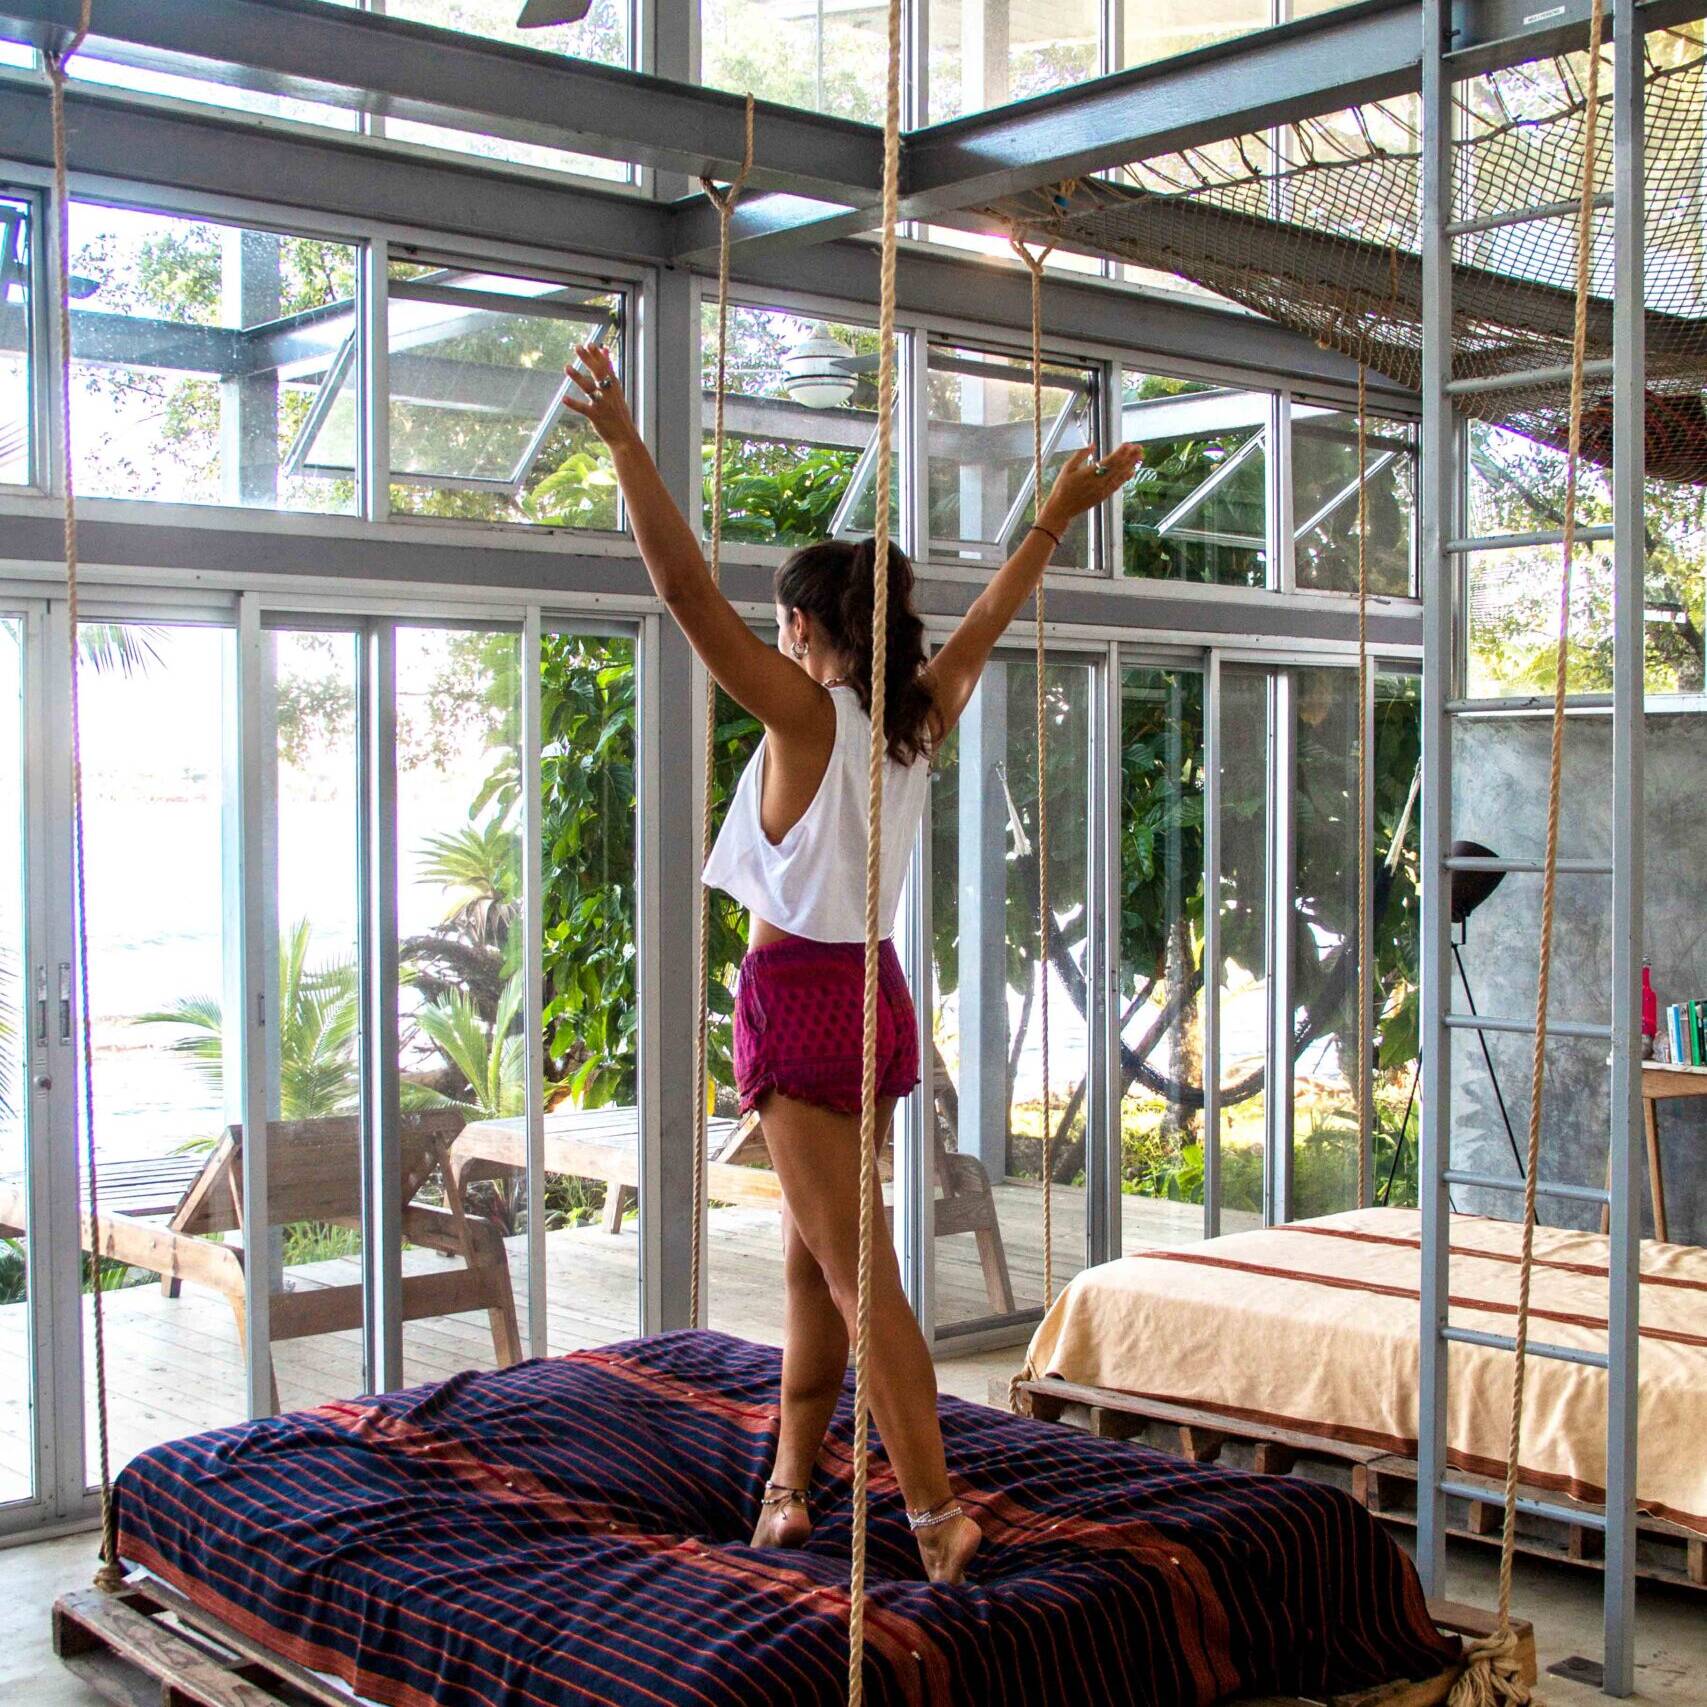 Hanging hammock at Casa Comunal Bocas del Toro